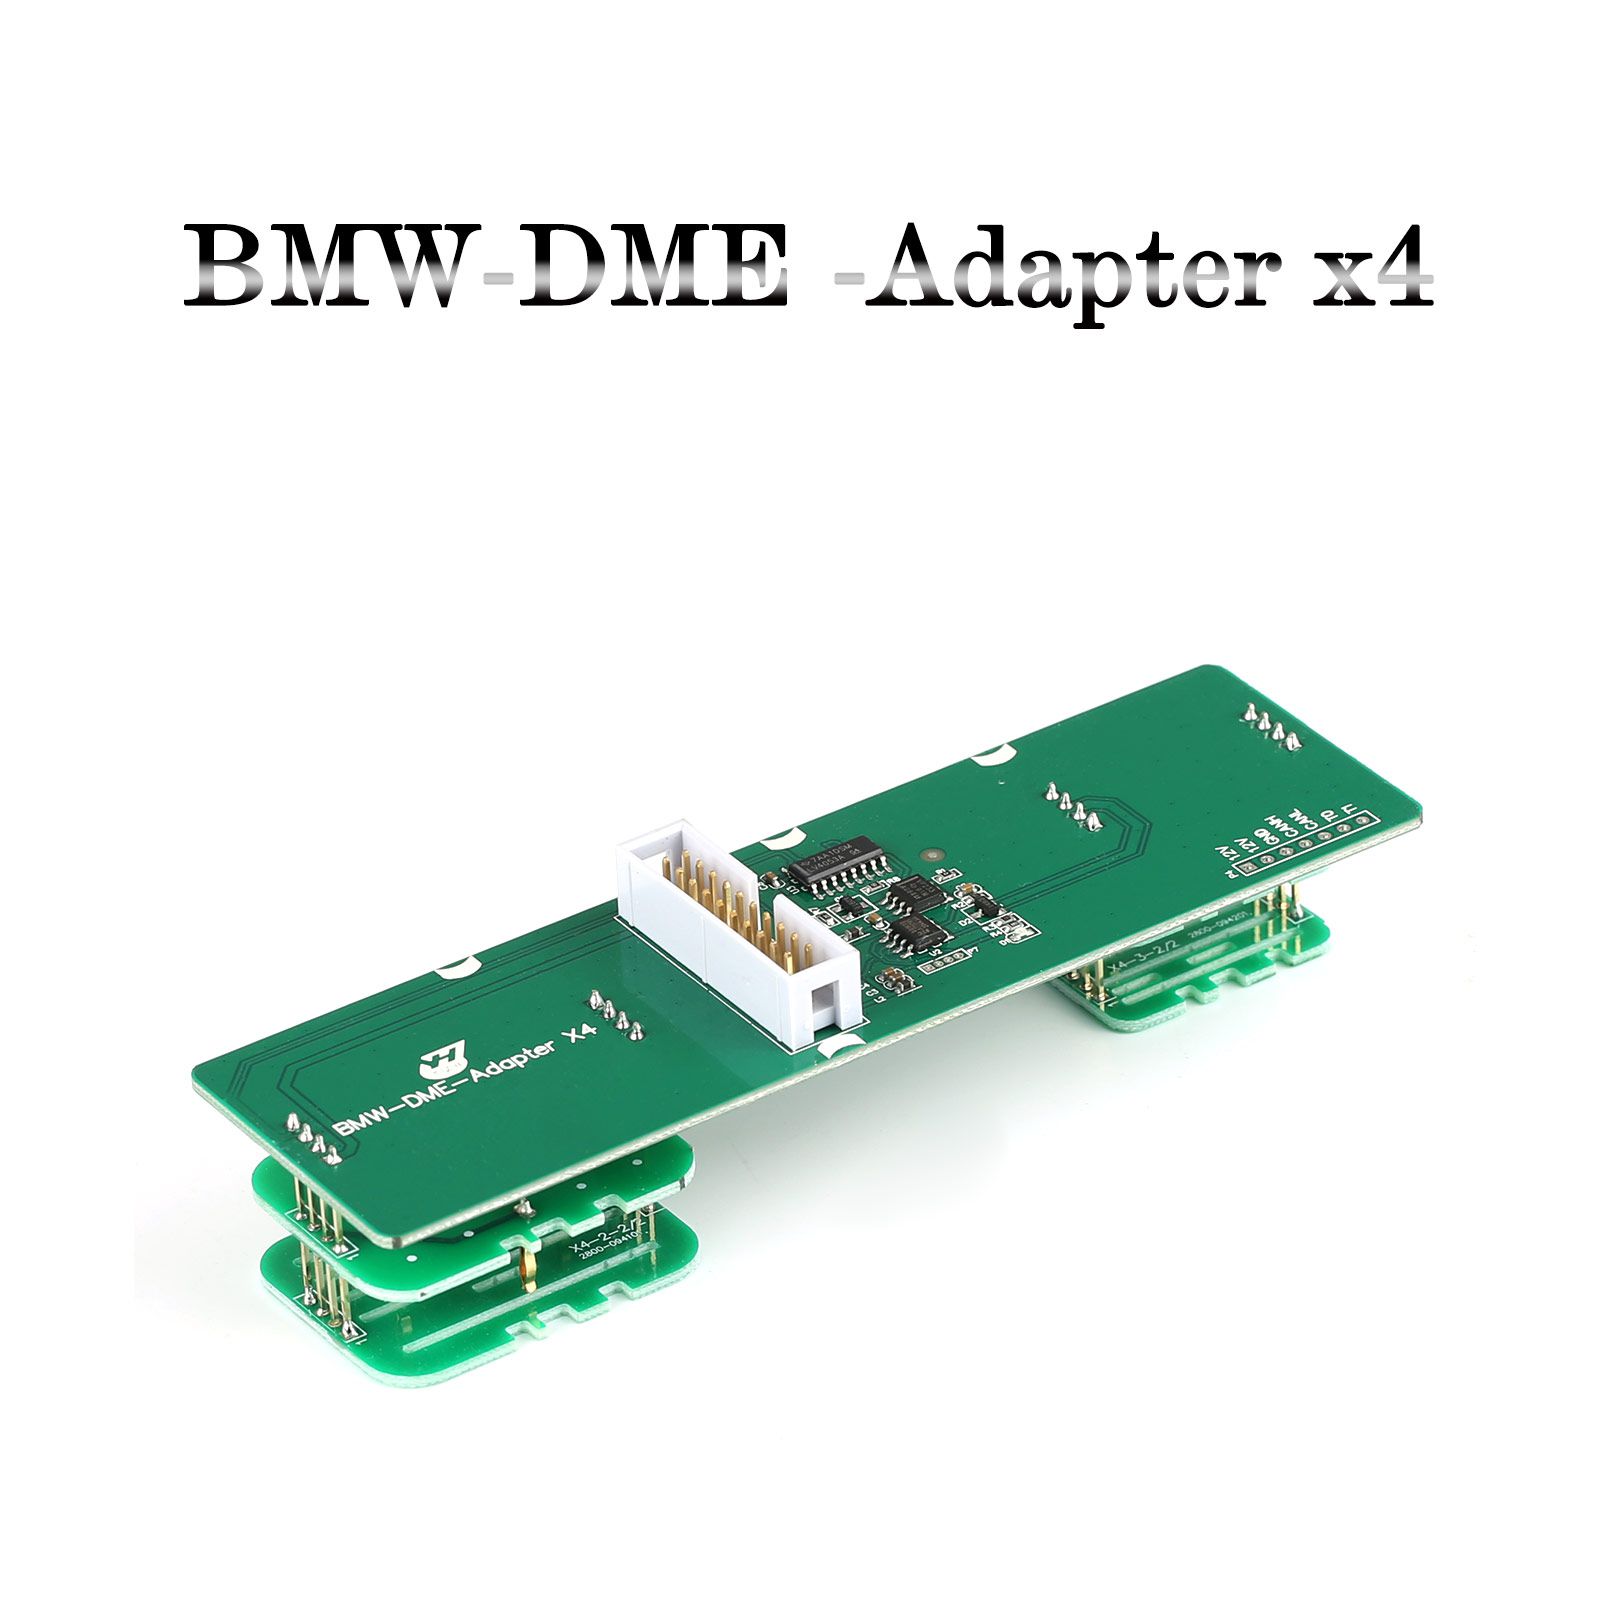 N12/N14 DME ISN 읽기/쓰기 및 클론을 위한 옌화 ACDP BMW-DME 어댑터 X4 데스크탑 인터페이스 보드